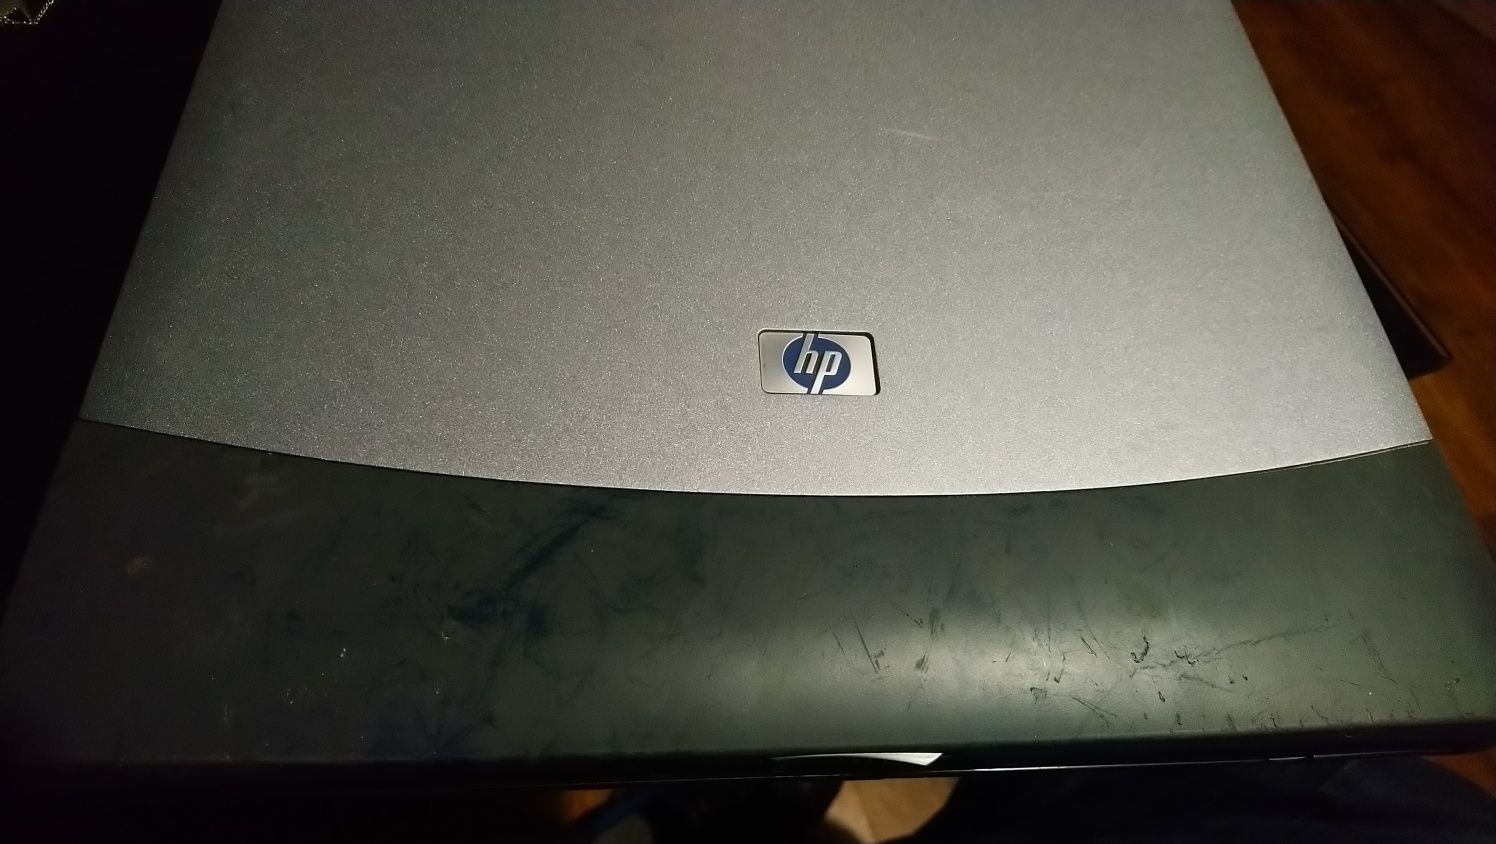 Laptop HP omnibook 6100 bez zassilacza